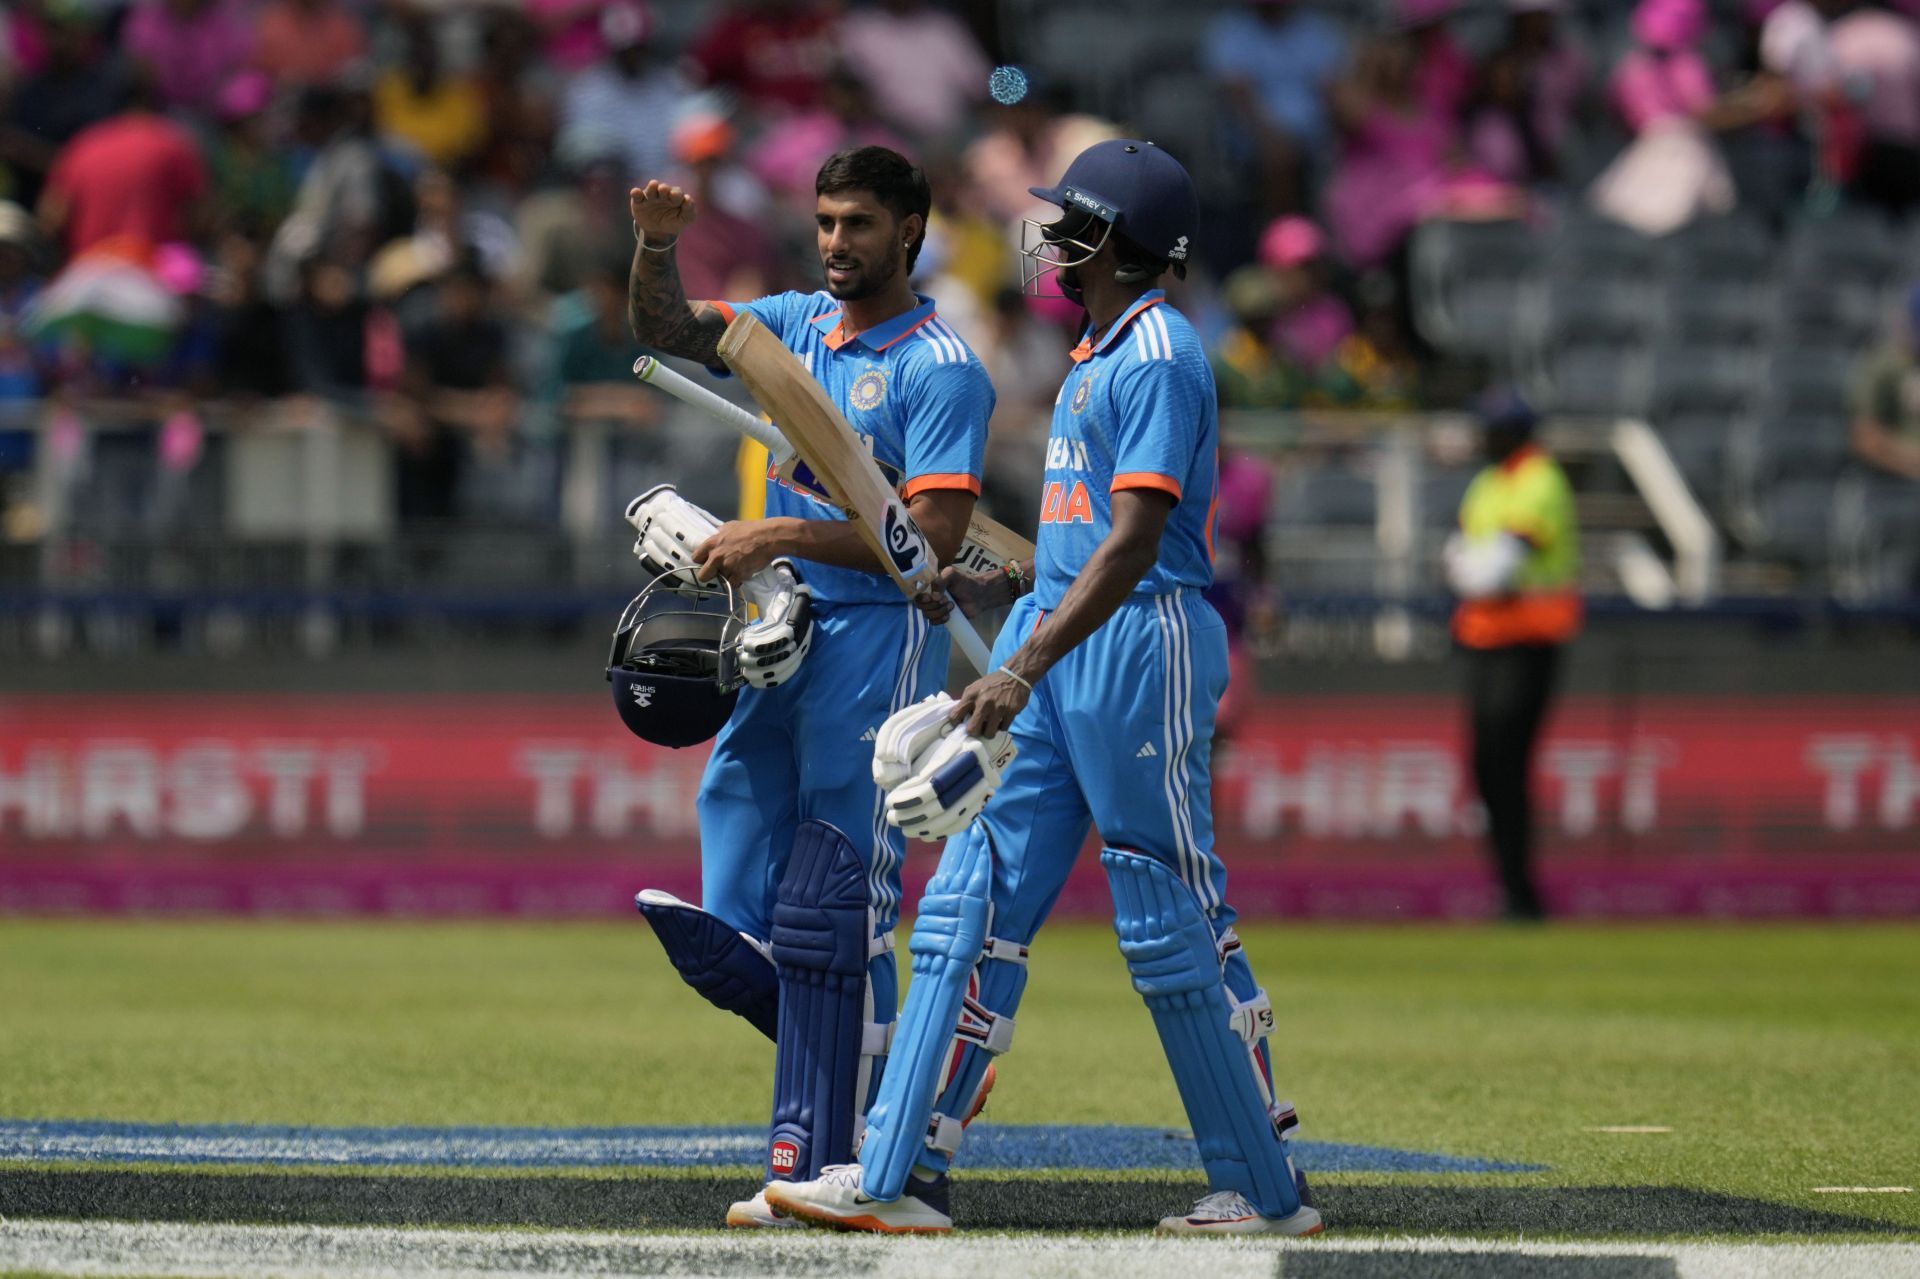 Sai Sudharsan made an unbeaten fifty on his ODI debut